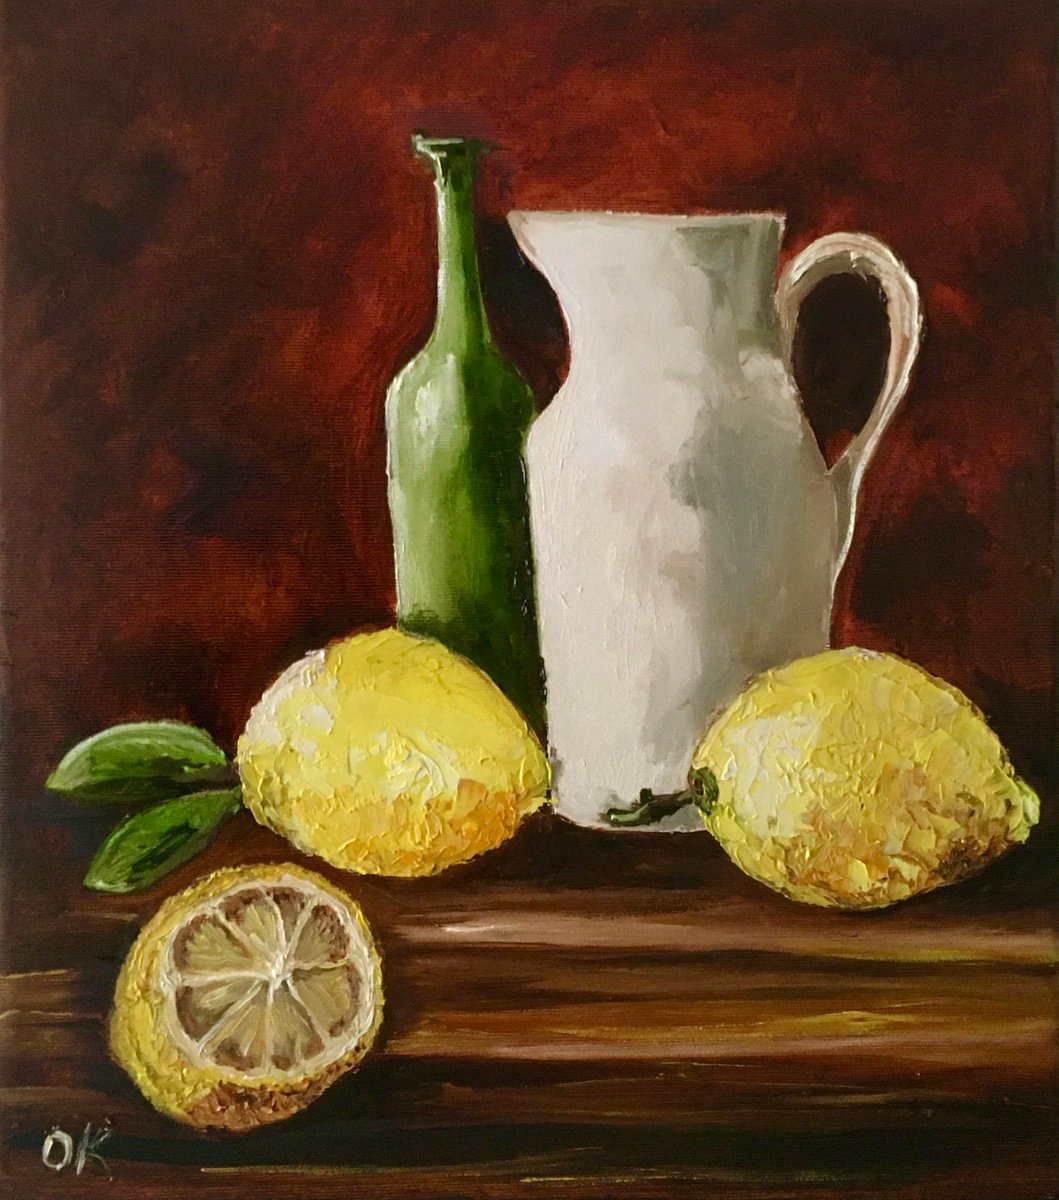 Bottles and lemons. Still life. Palette knife painting on linen canvas by Olga Koval